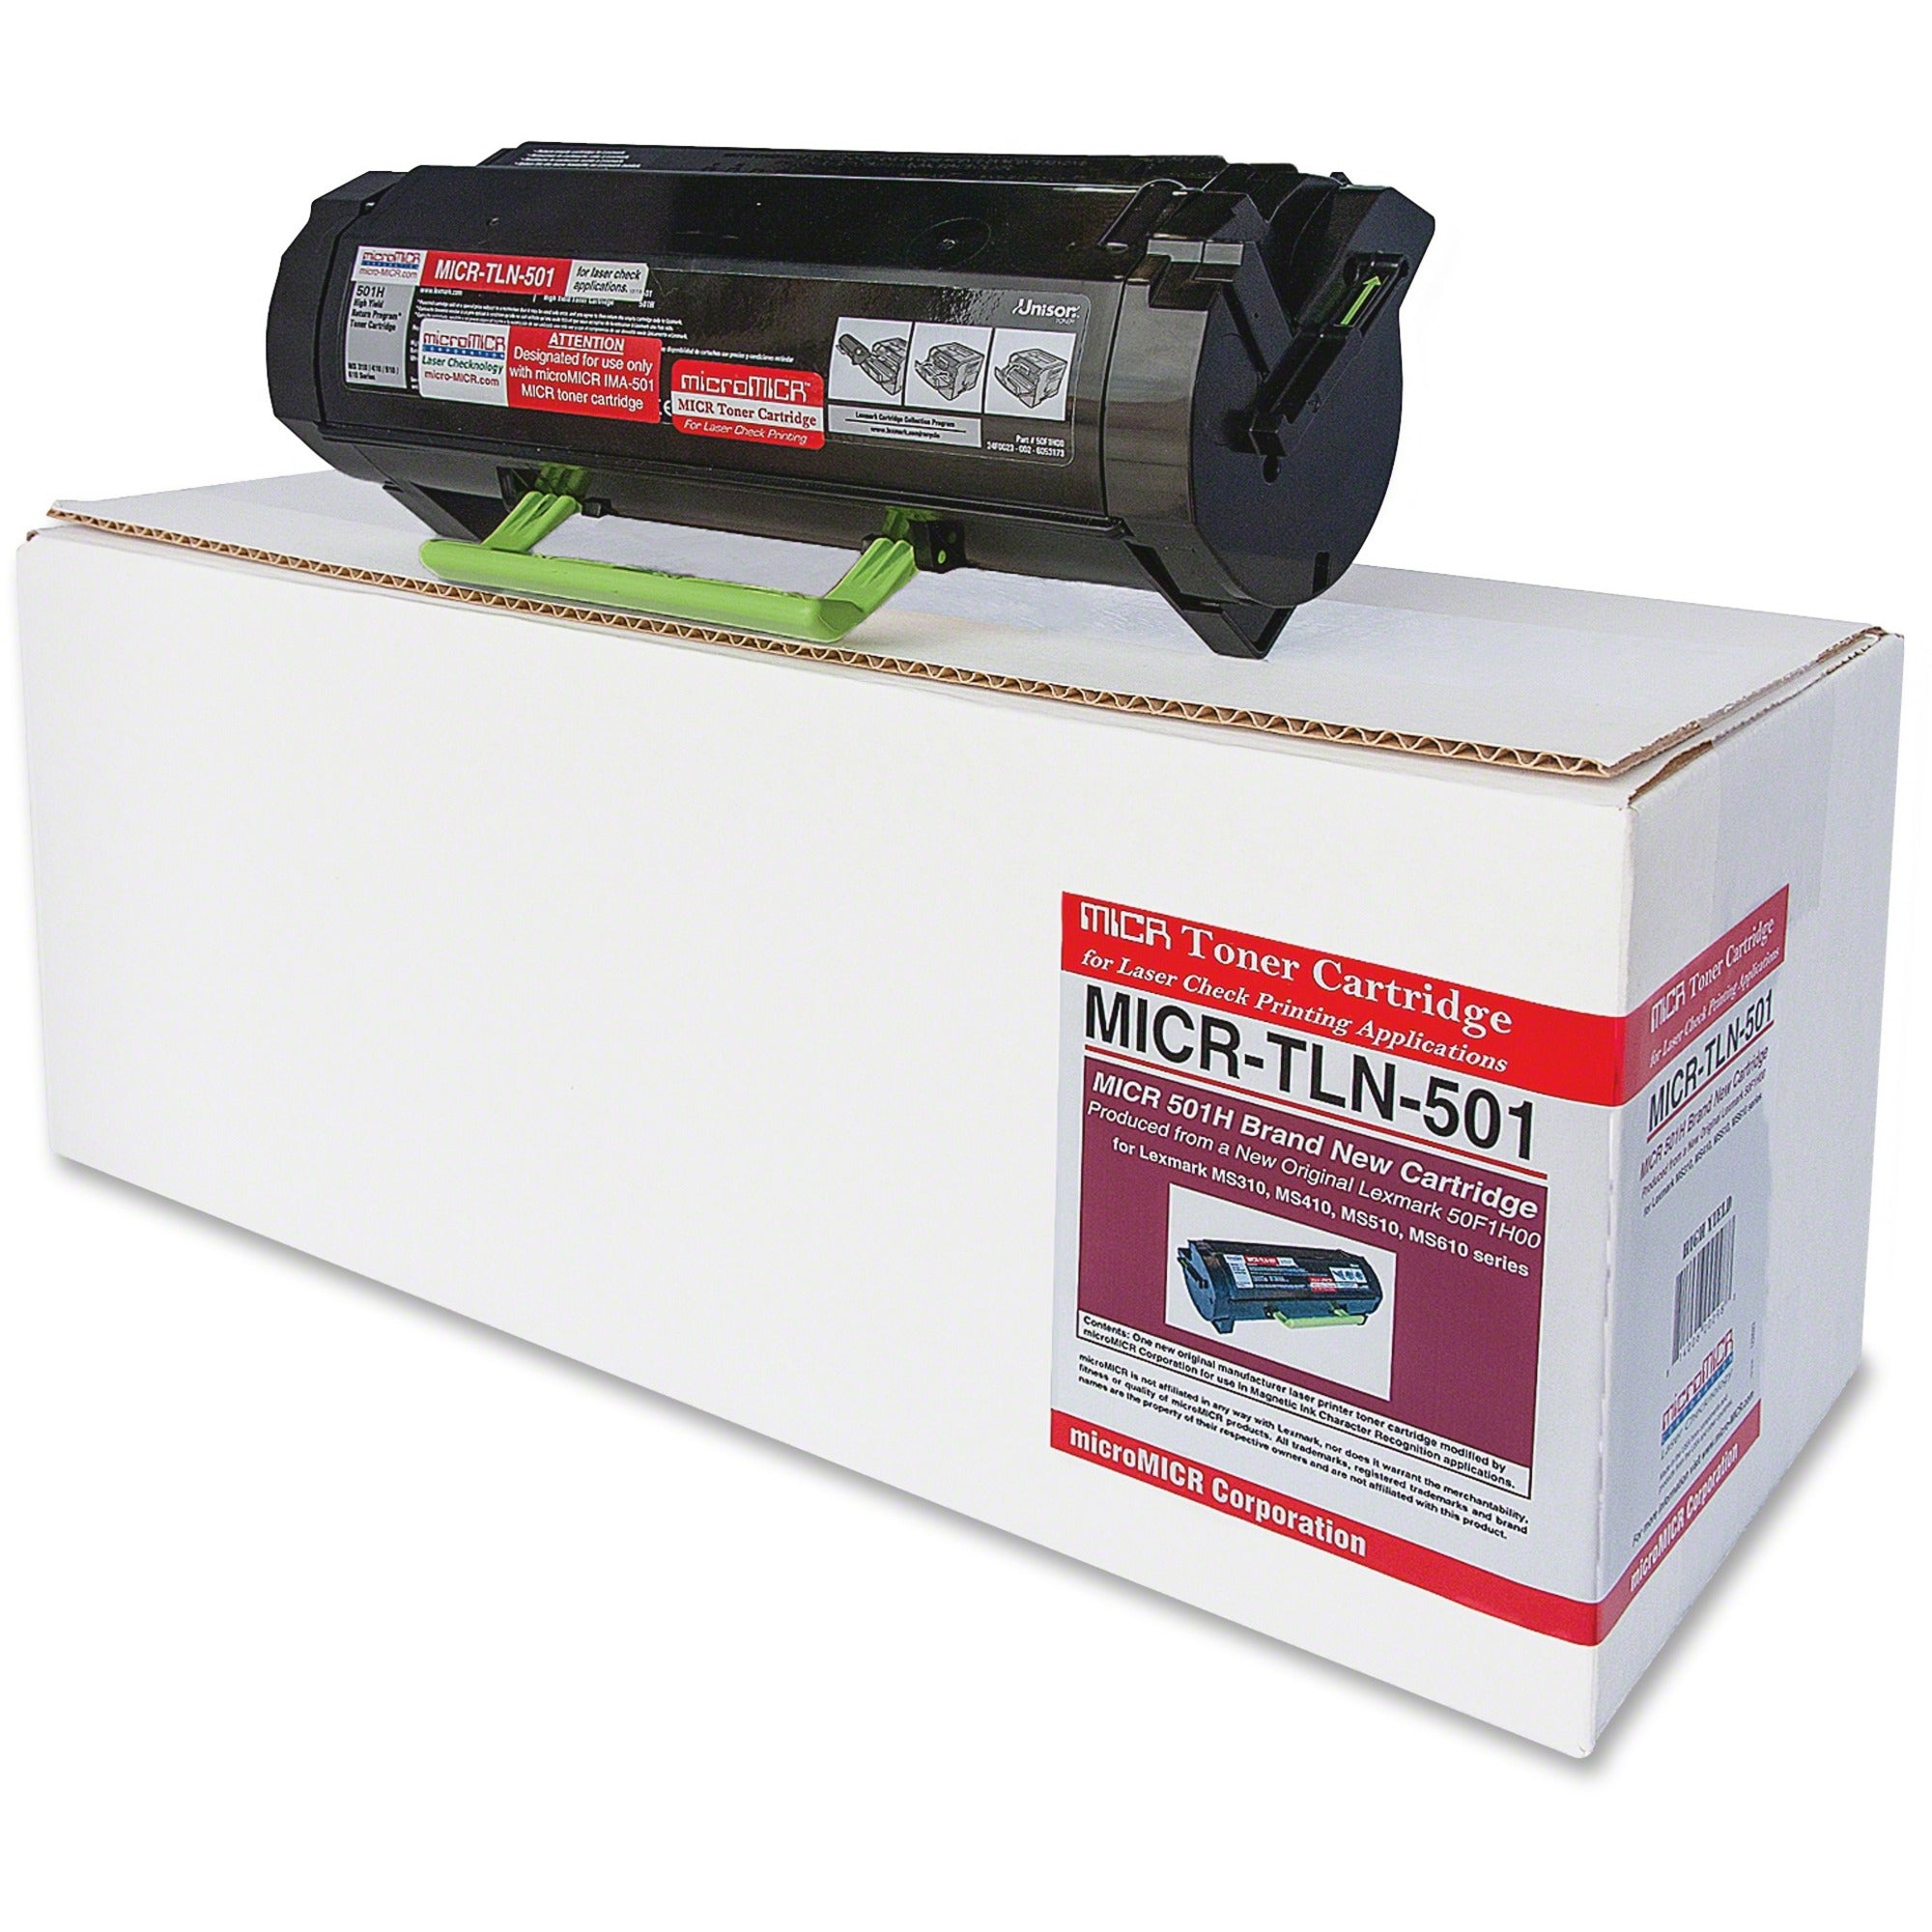 microMICR MICR Toner Cartridge - Alternative for Lexmark MS310 - Laser - Black - 1 Each - 